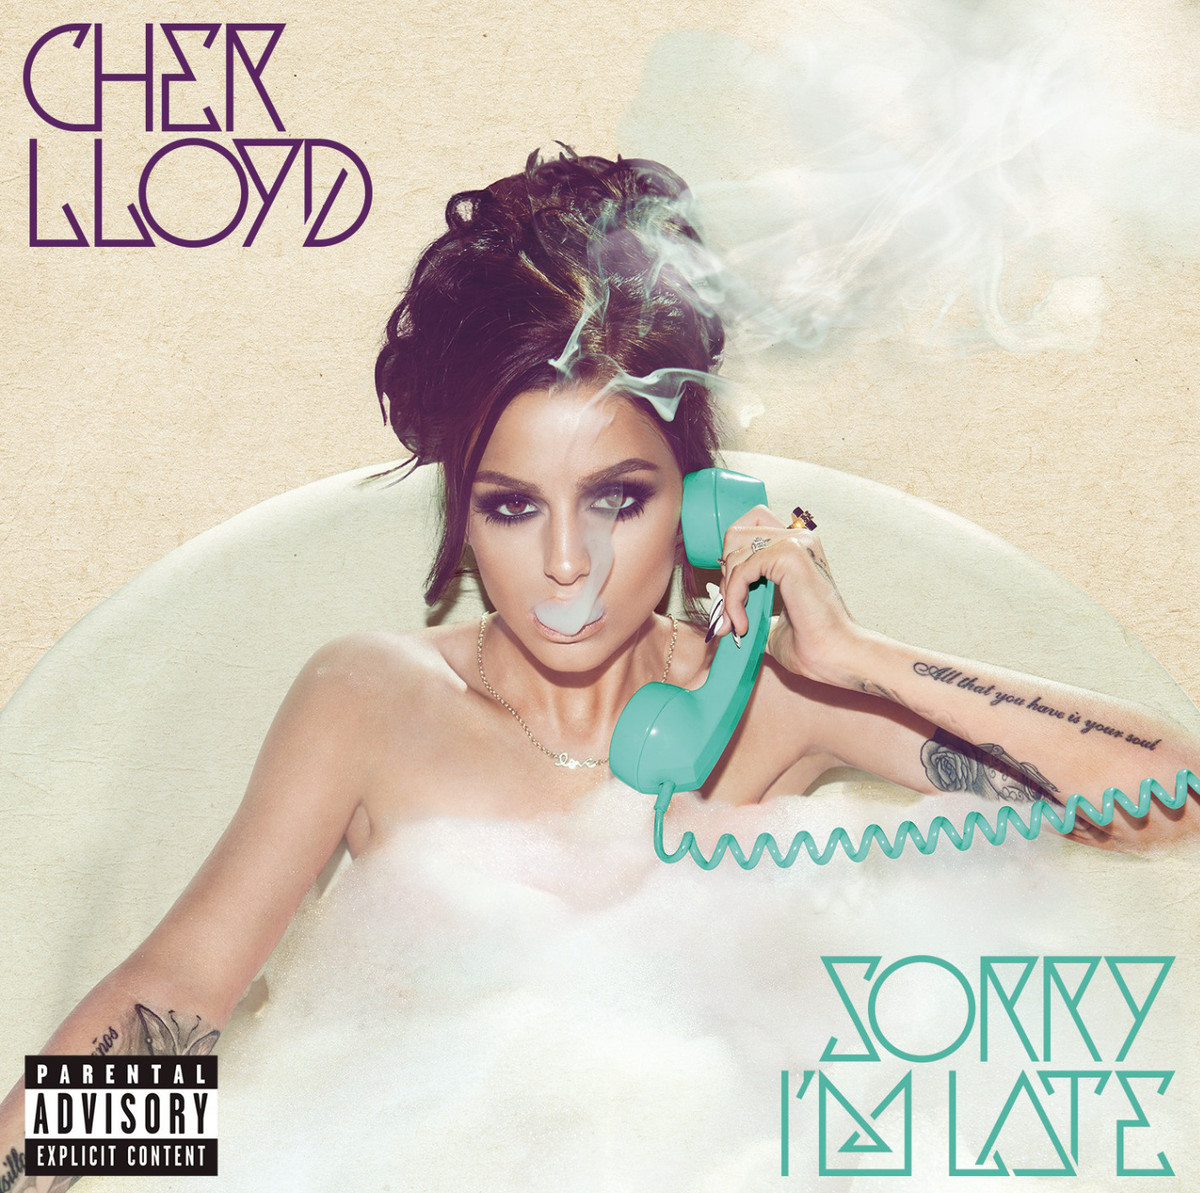 Cher-Lloyd-Sorry-Im-Late-2014-Explicit-1200x1200